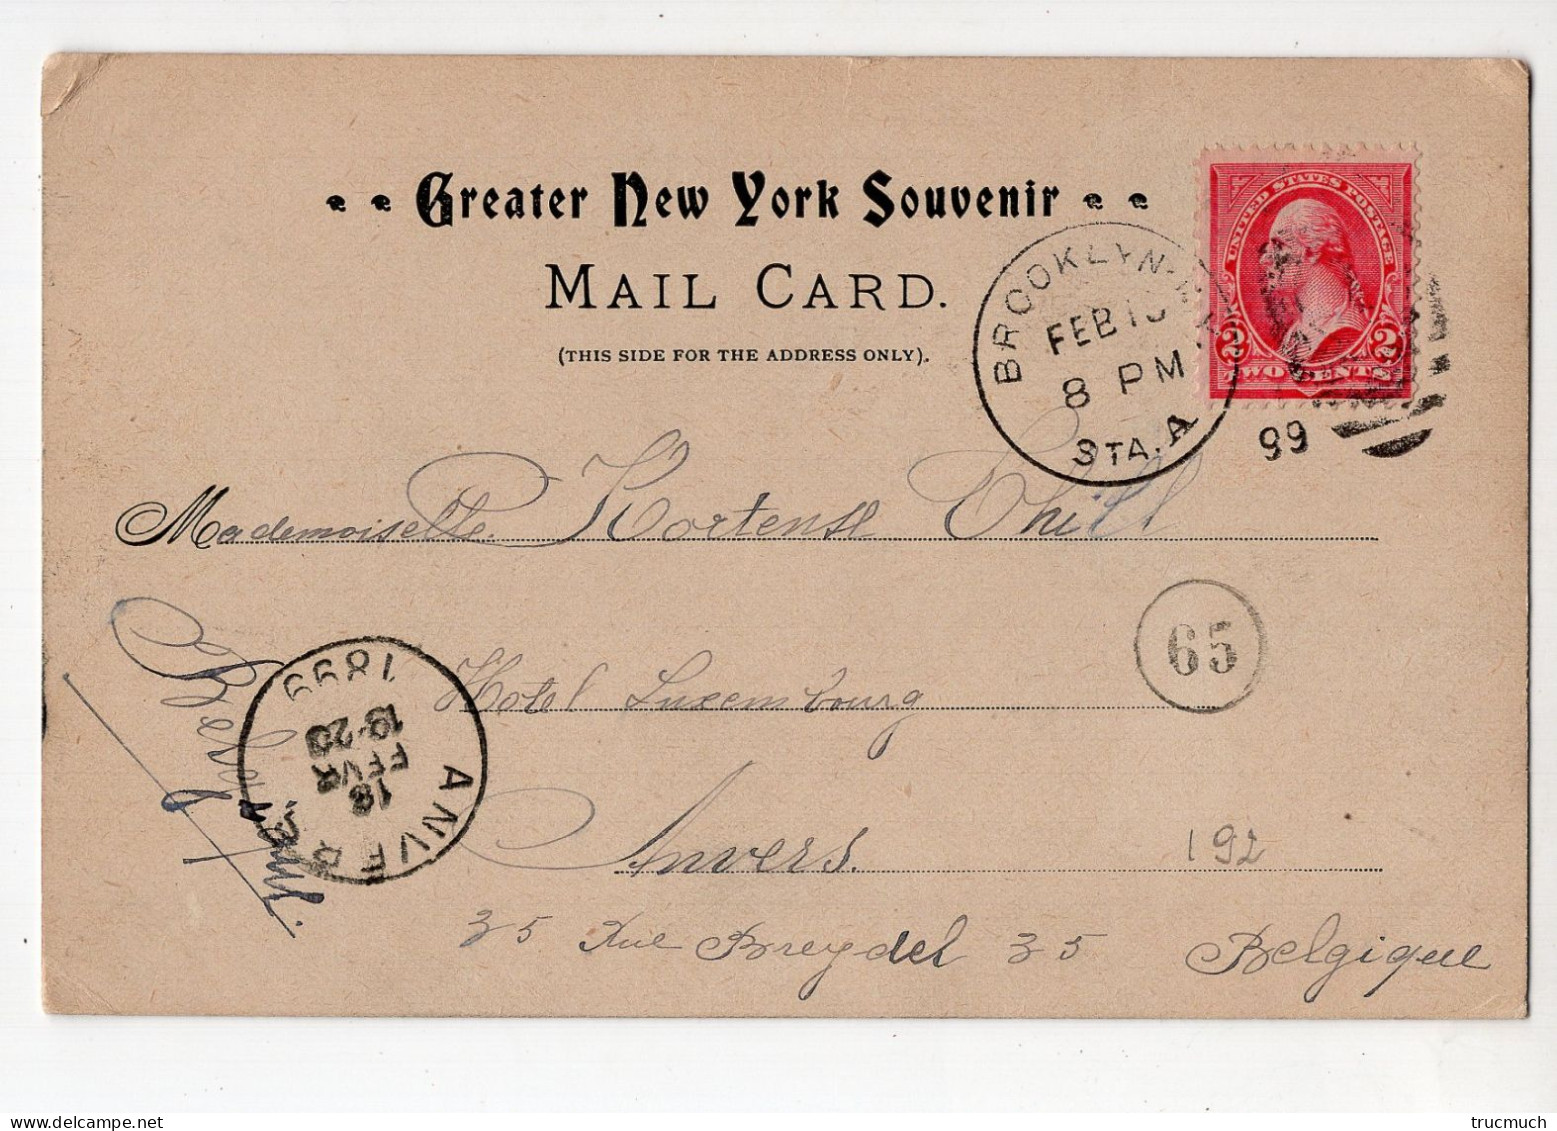 U.S.A. - NEW YORK - Greater Souvenir - Brooklyn Bridge *litho*1899* - Ponti E Gallerie